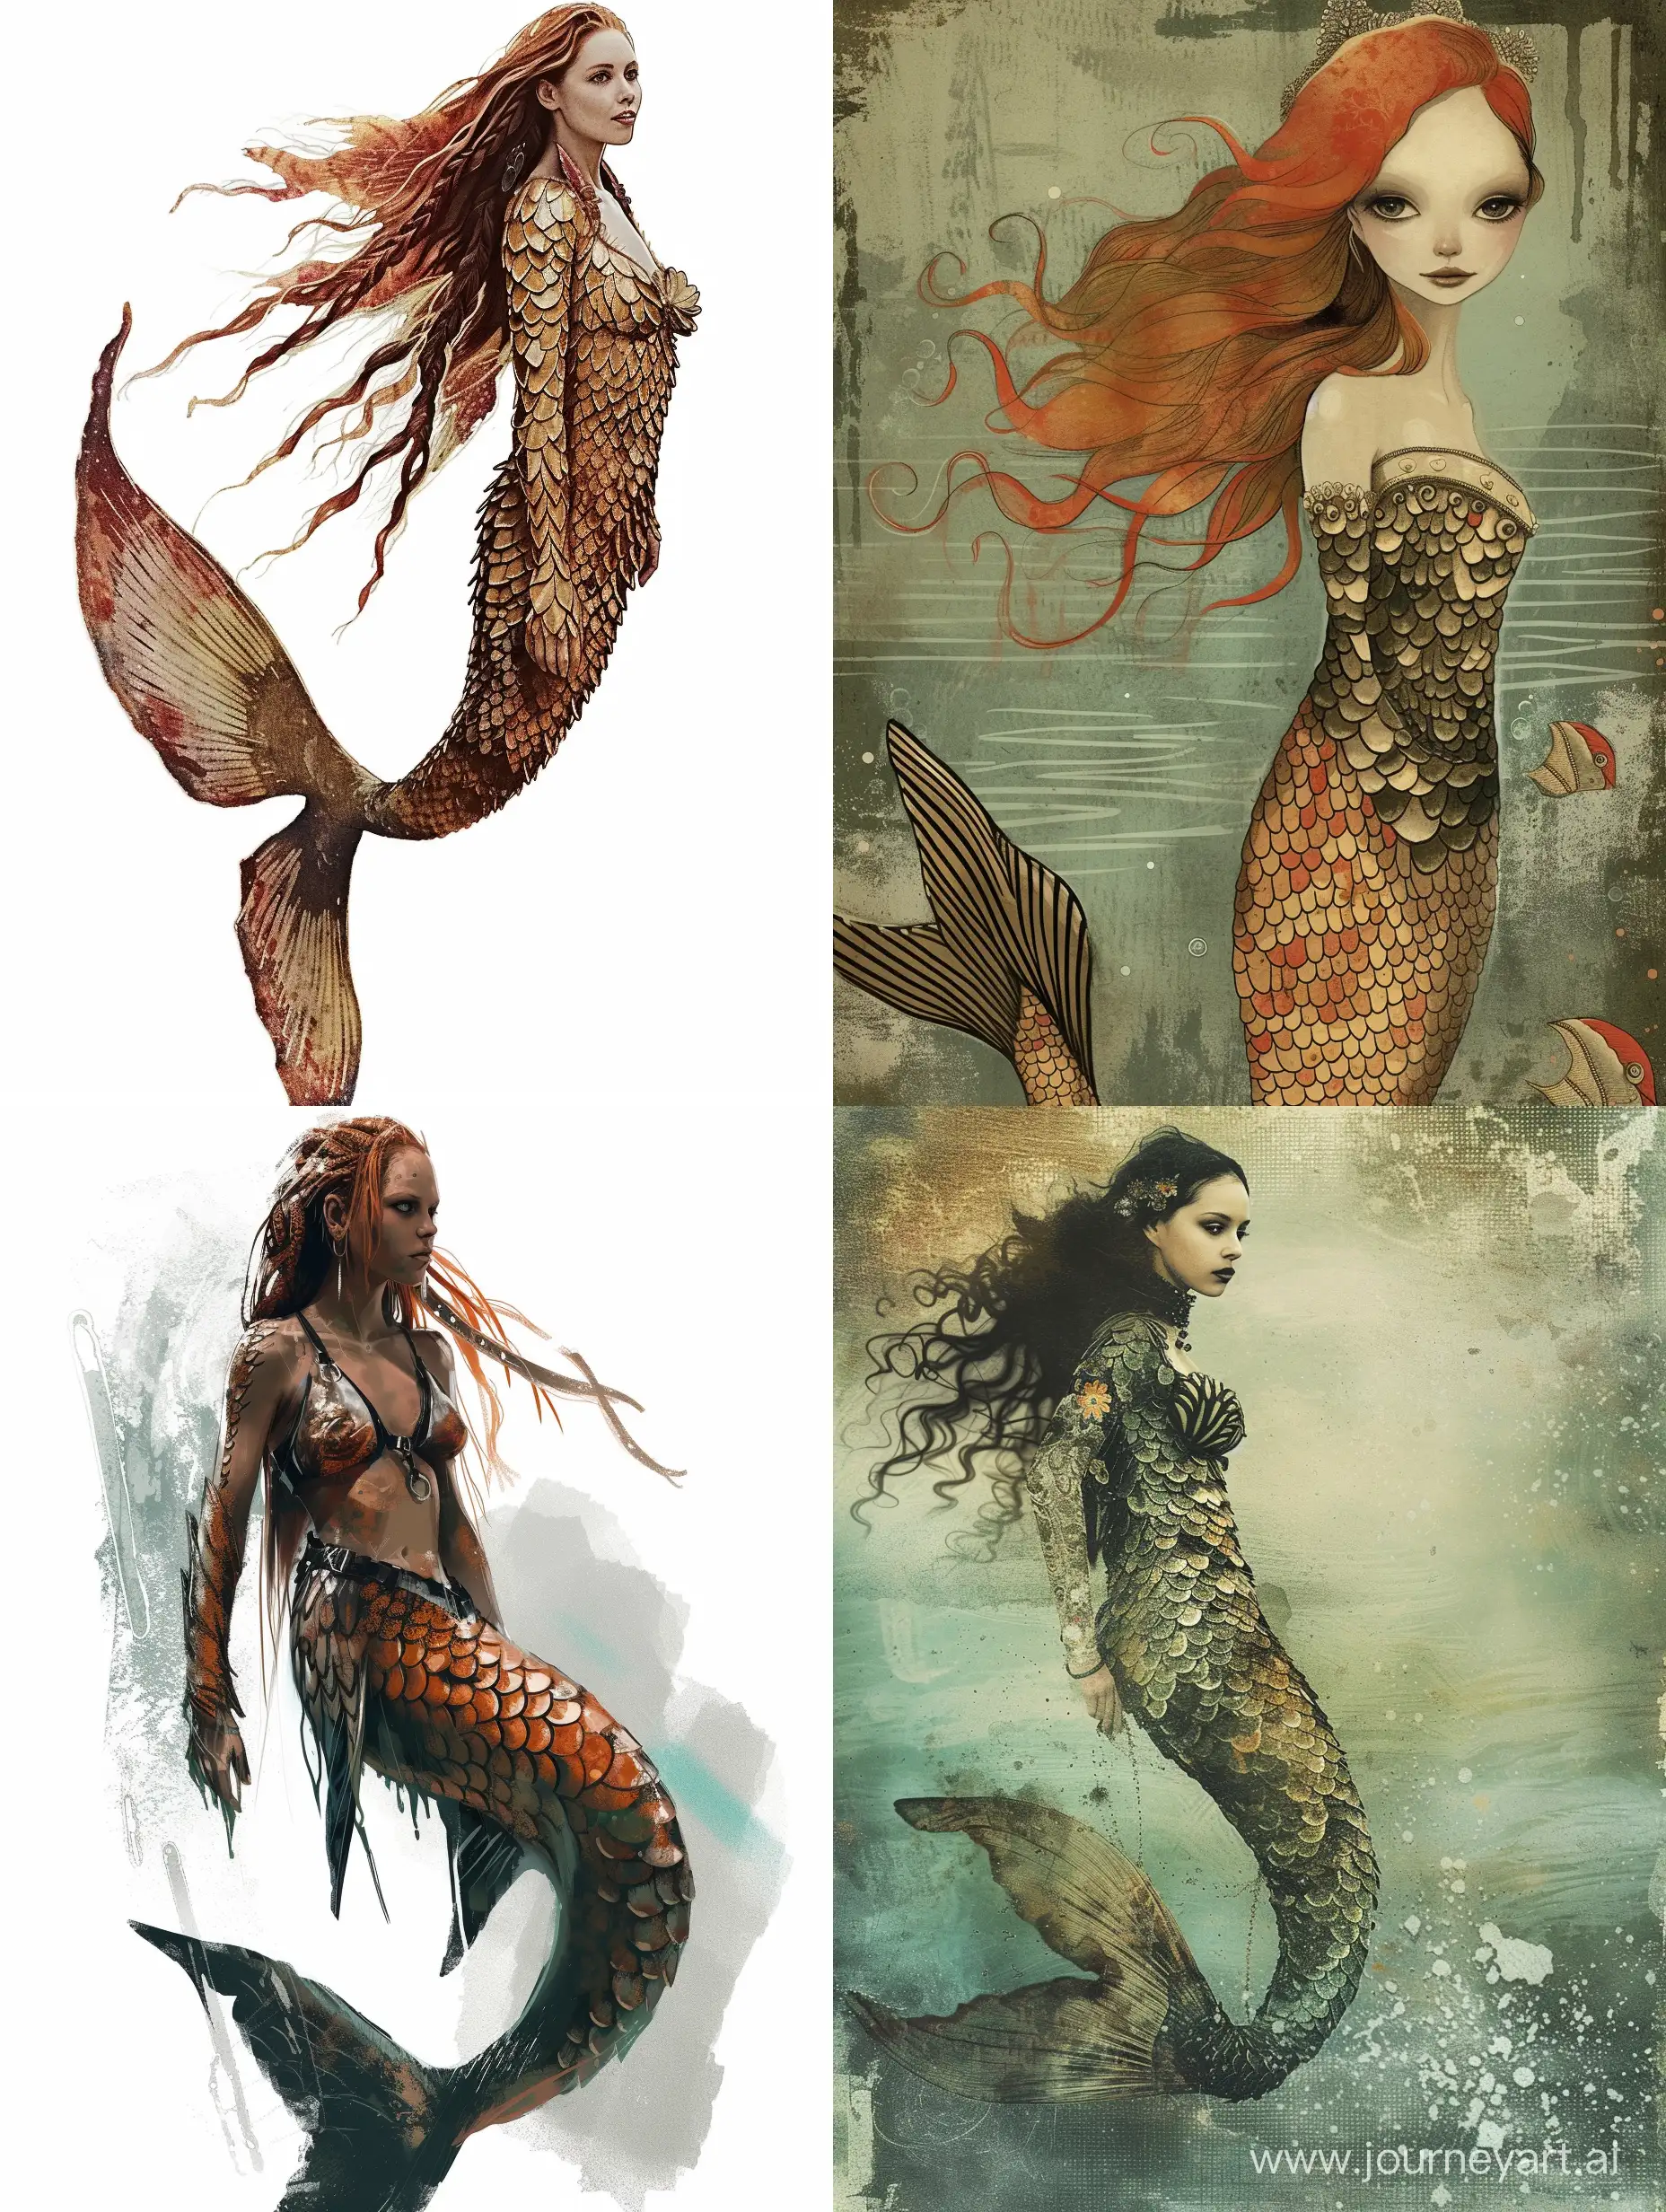 Anthropomorphic-Fish-Woman-Holding-Scales-in-Mermaid-Fantasy-Art